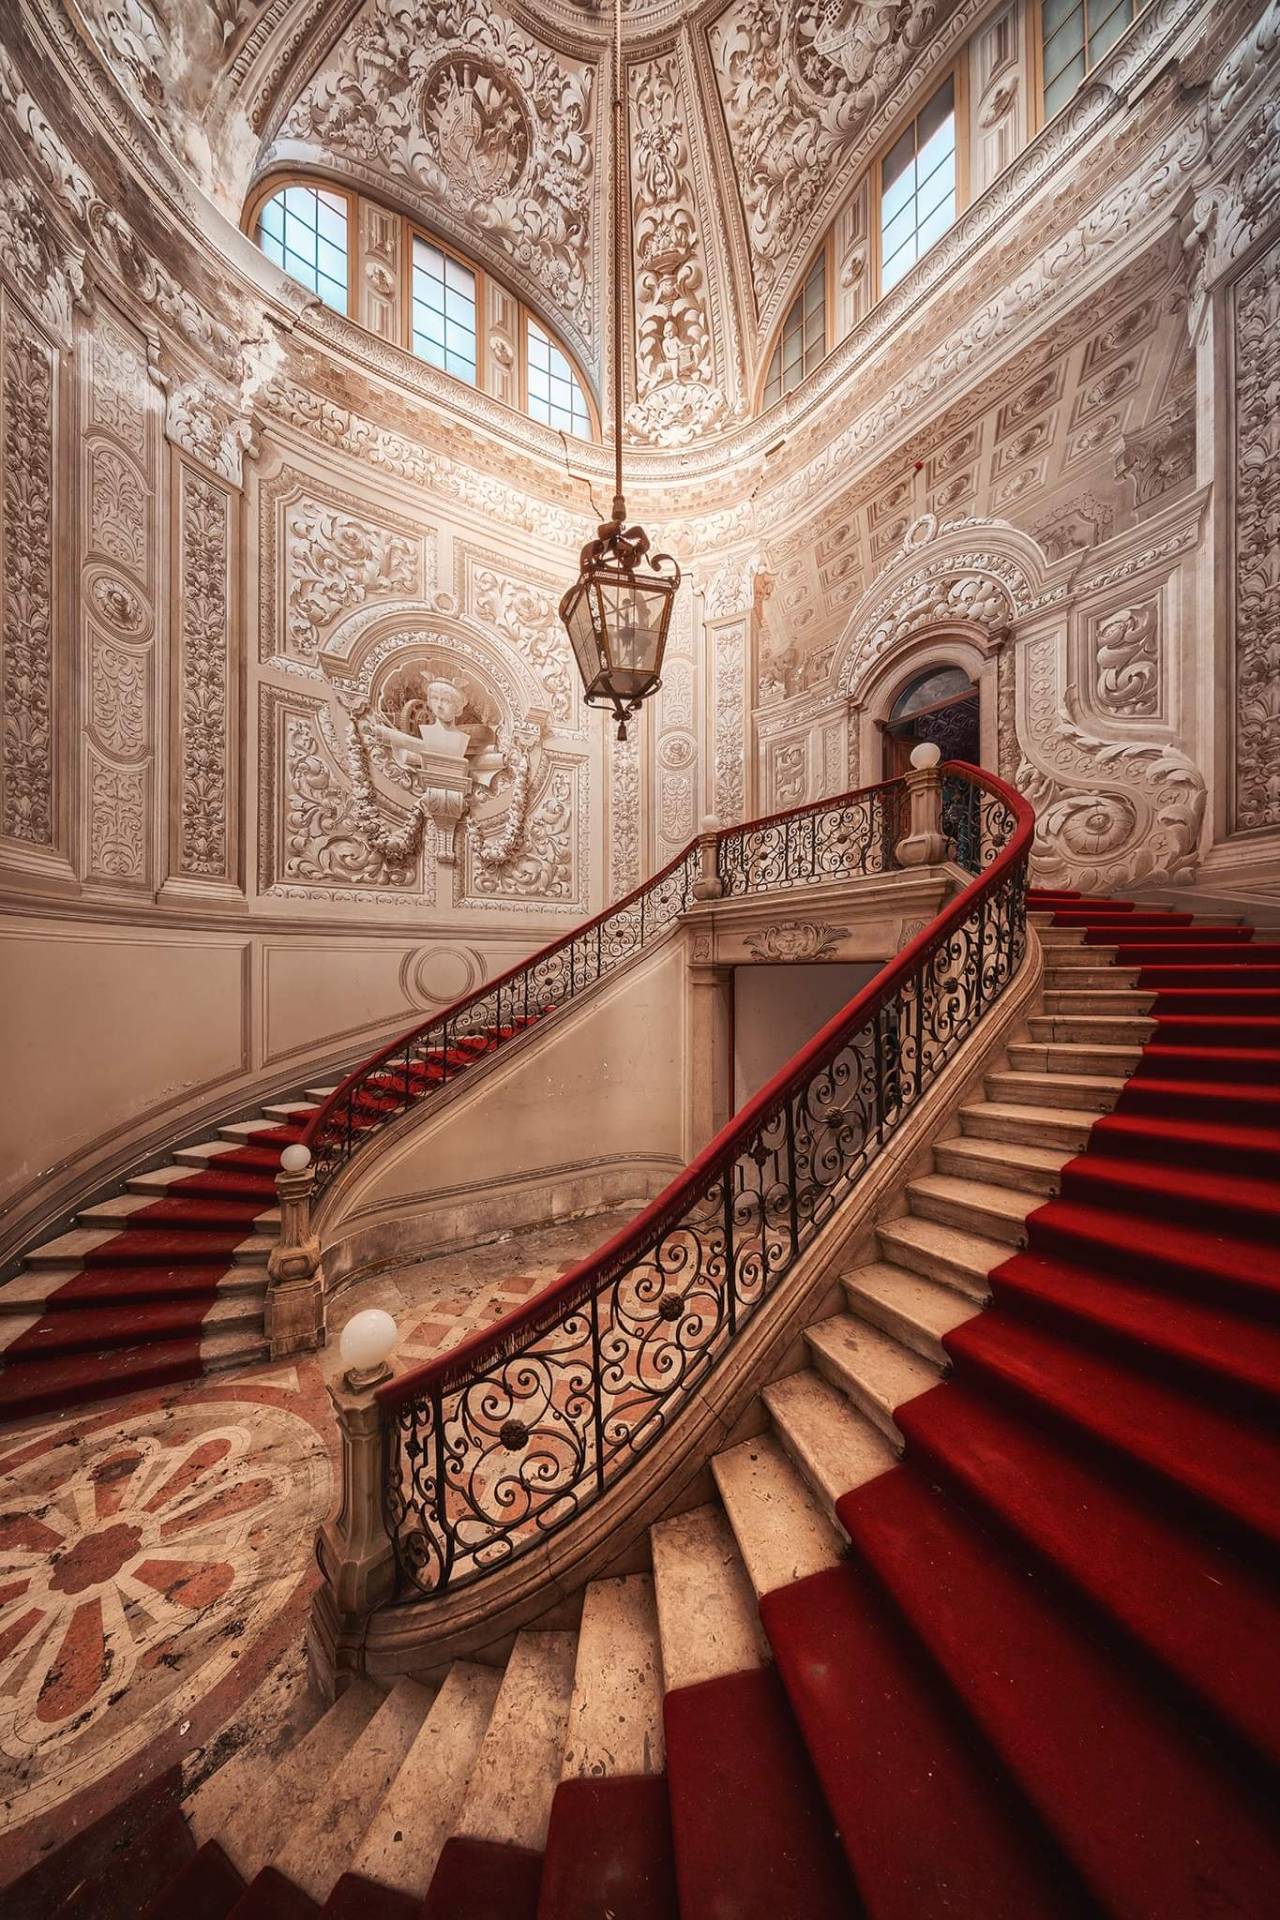 Matthias Haker Photography #art#photography#abandoned#abandoned mansion#urbex supreme#urbex explorer#urbexdecay#grand staircase#stairs#stairway#stairwell#staircase#matthias haker#urban exploration#urbex#europe#urbexeurope